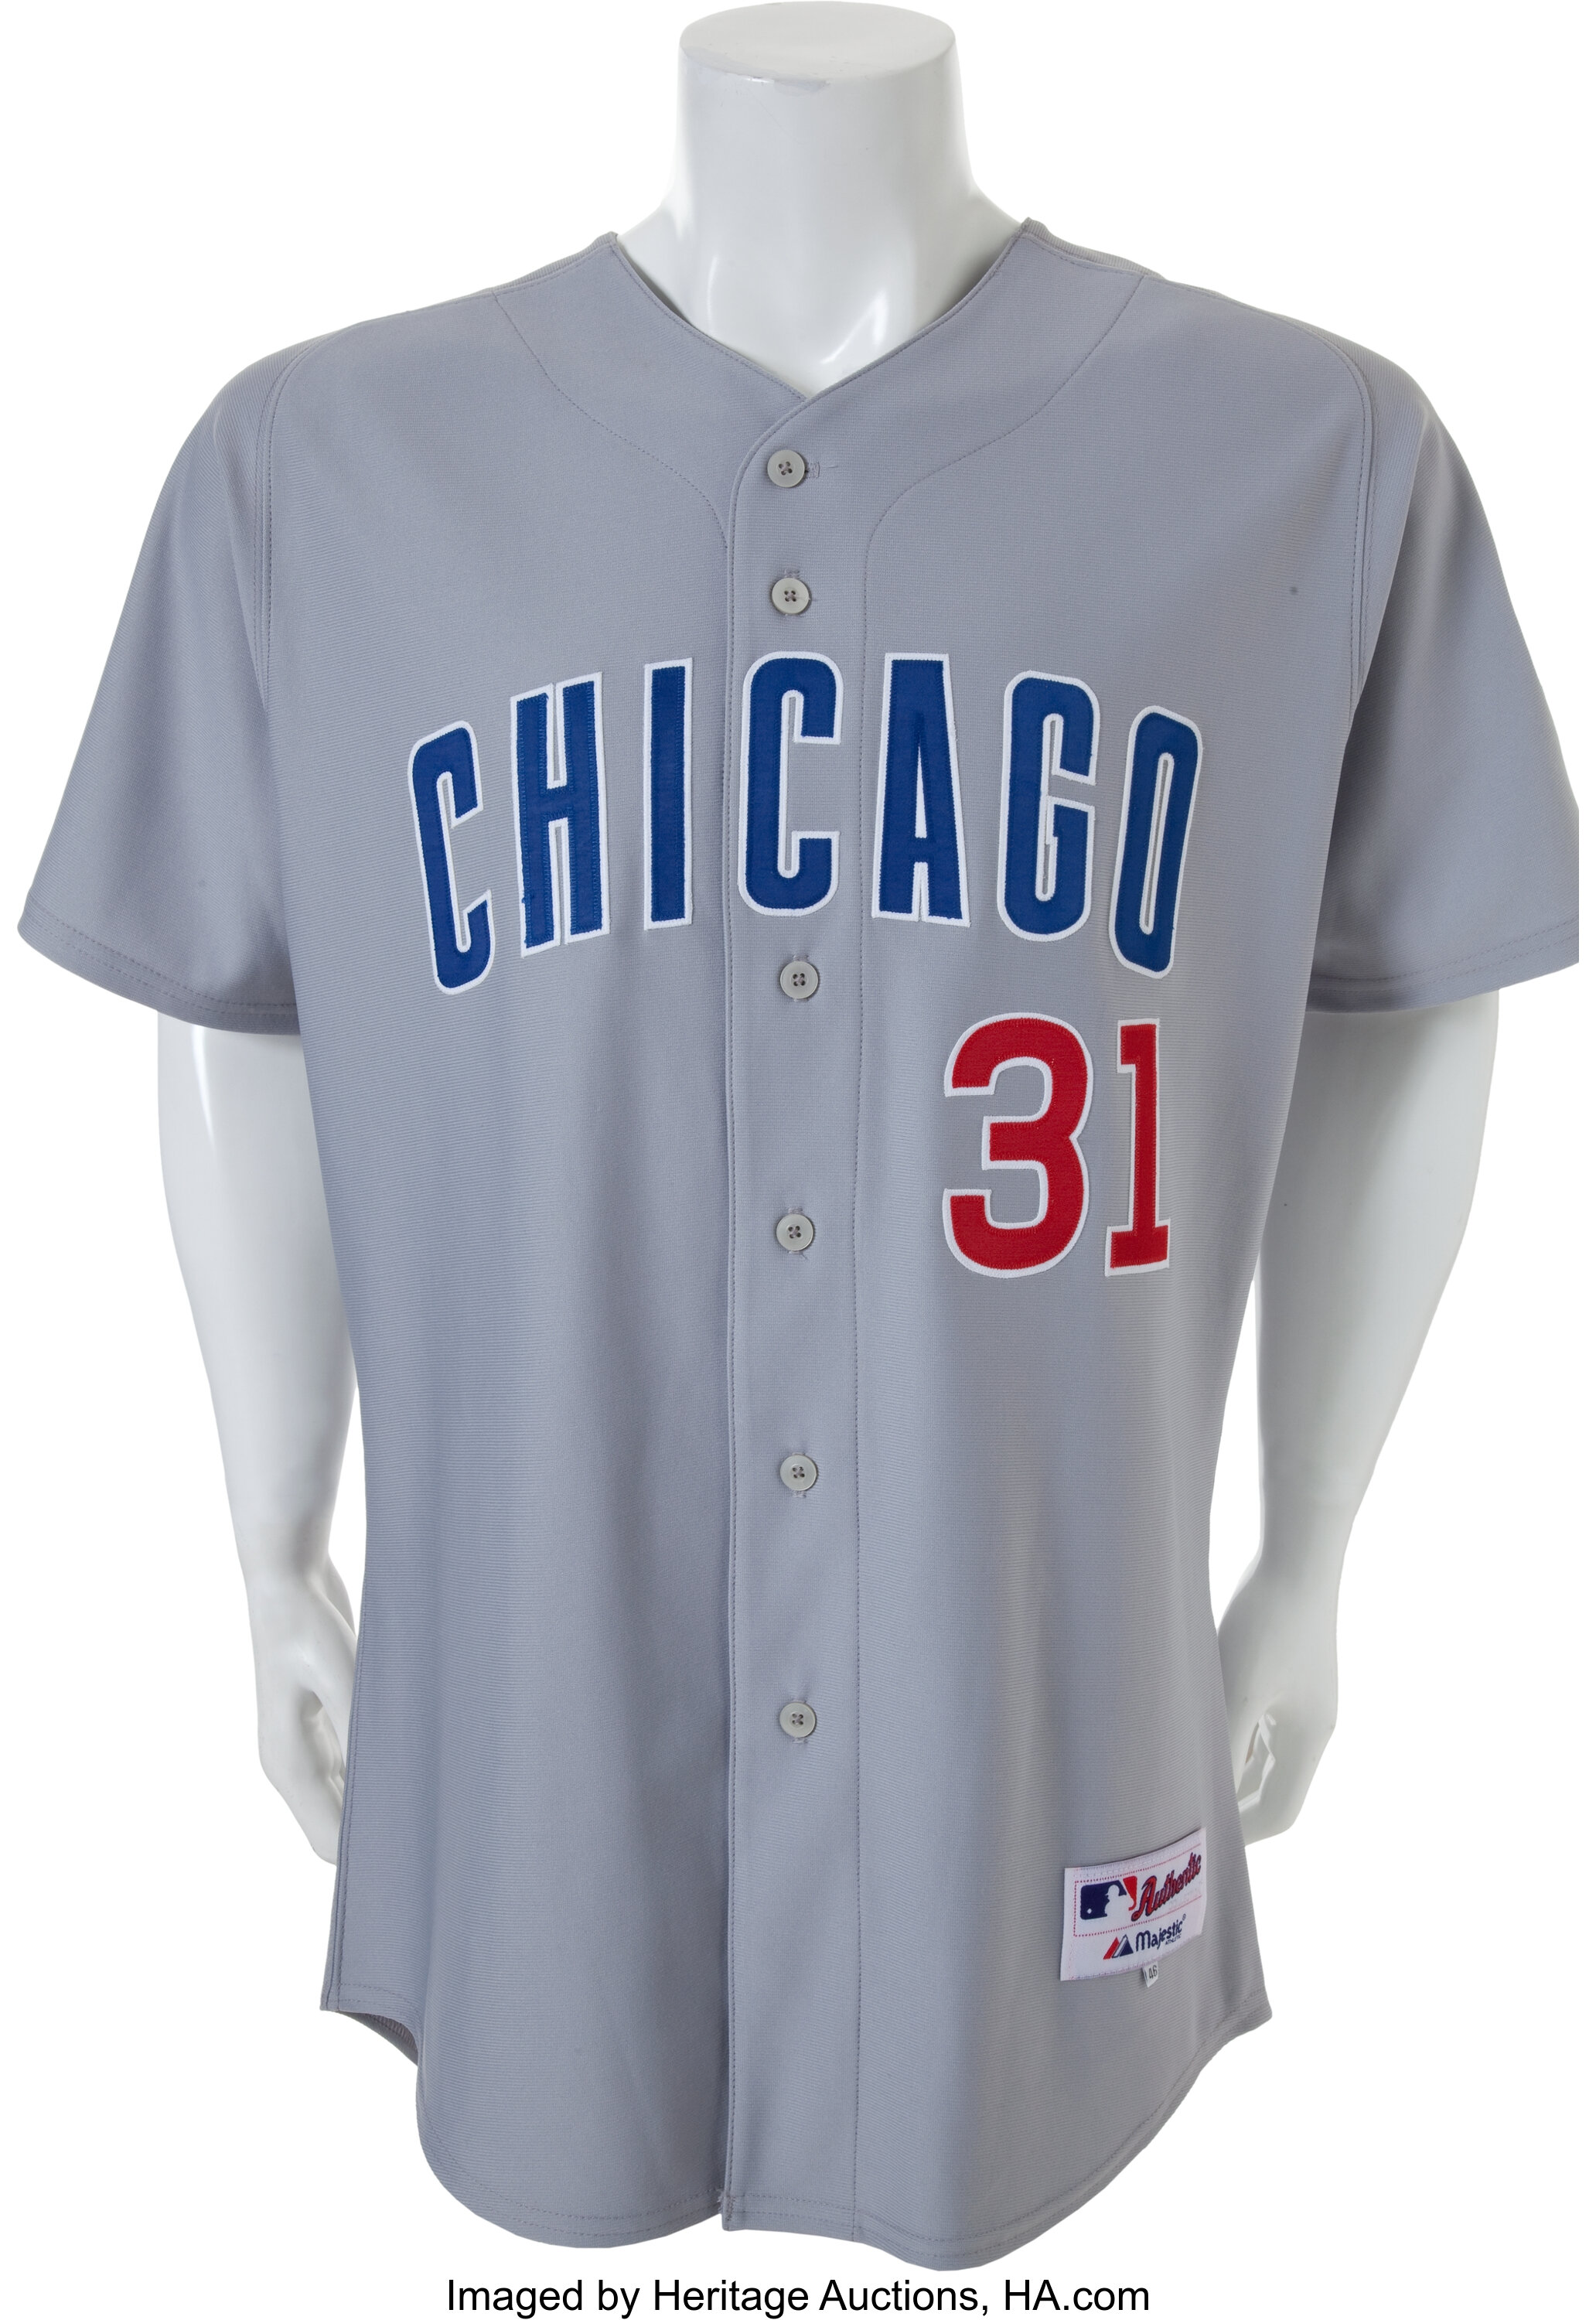 2004 Greg Maddux Game Worn Chicago Cubs Jersey. Baseball, Lot #82738